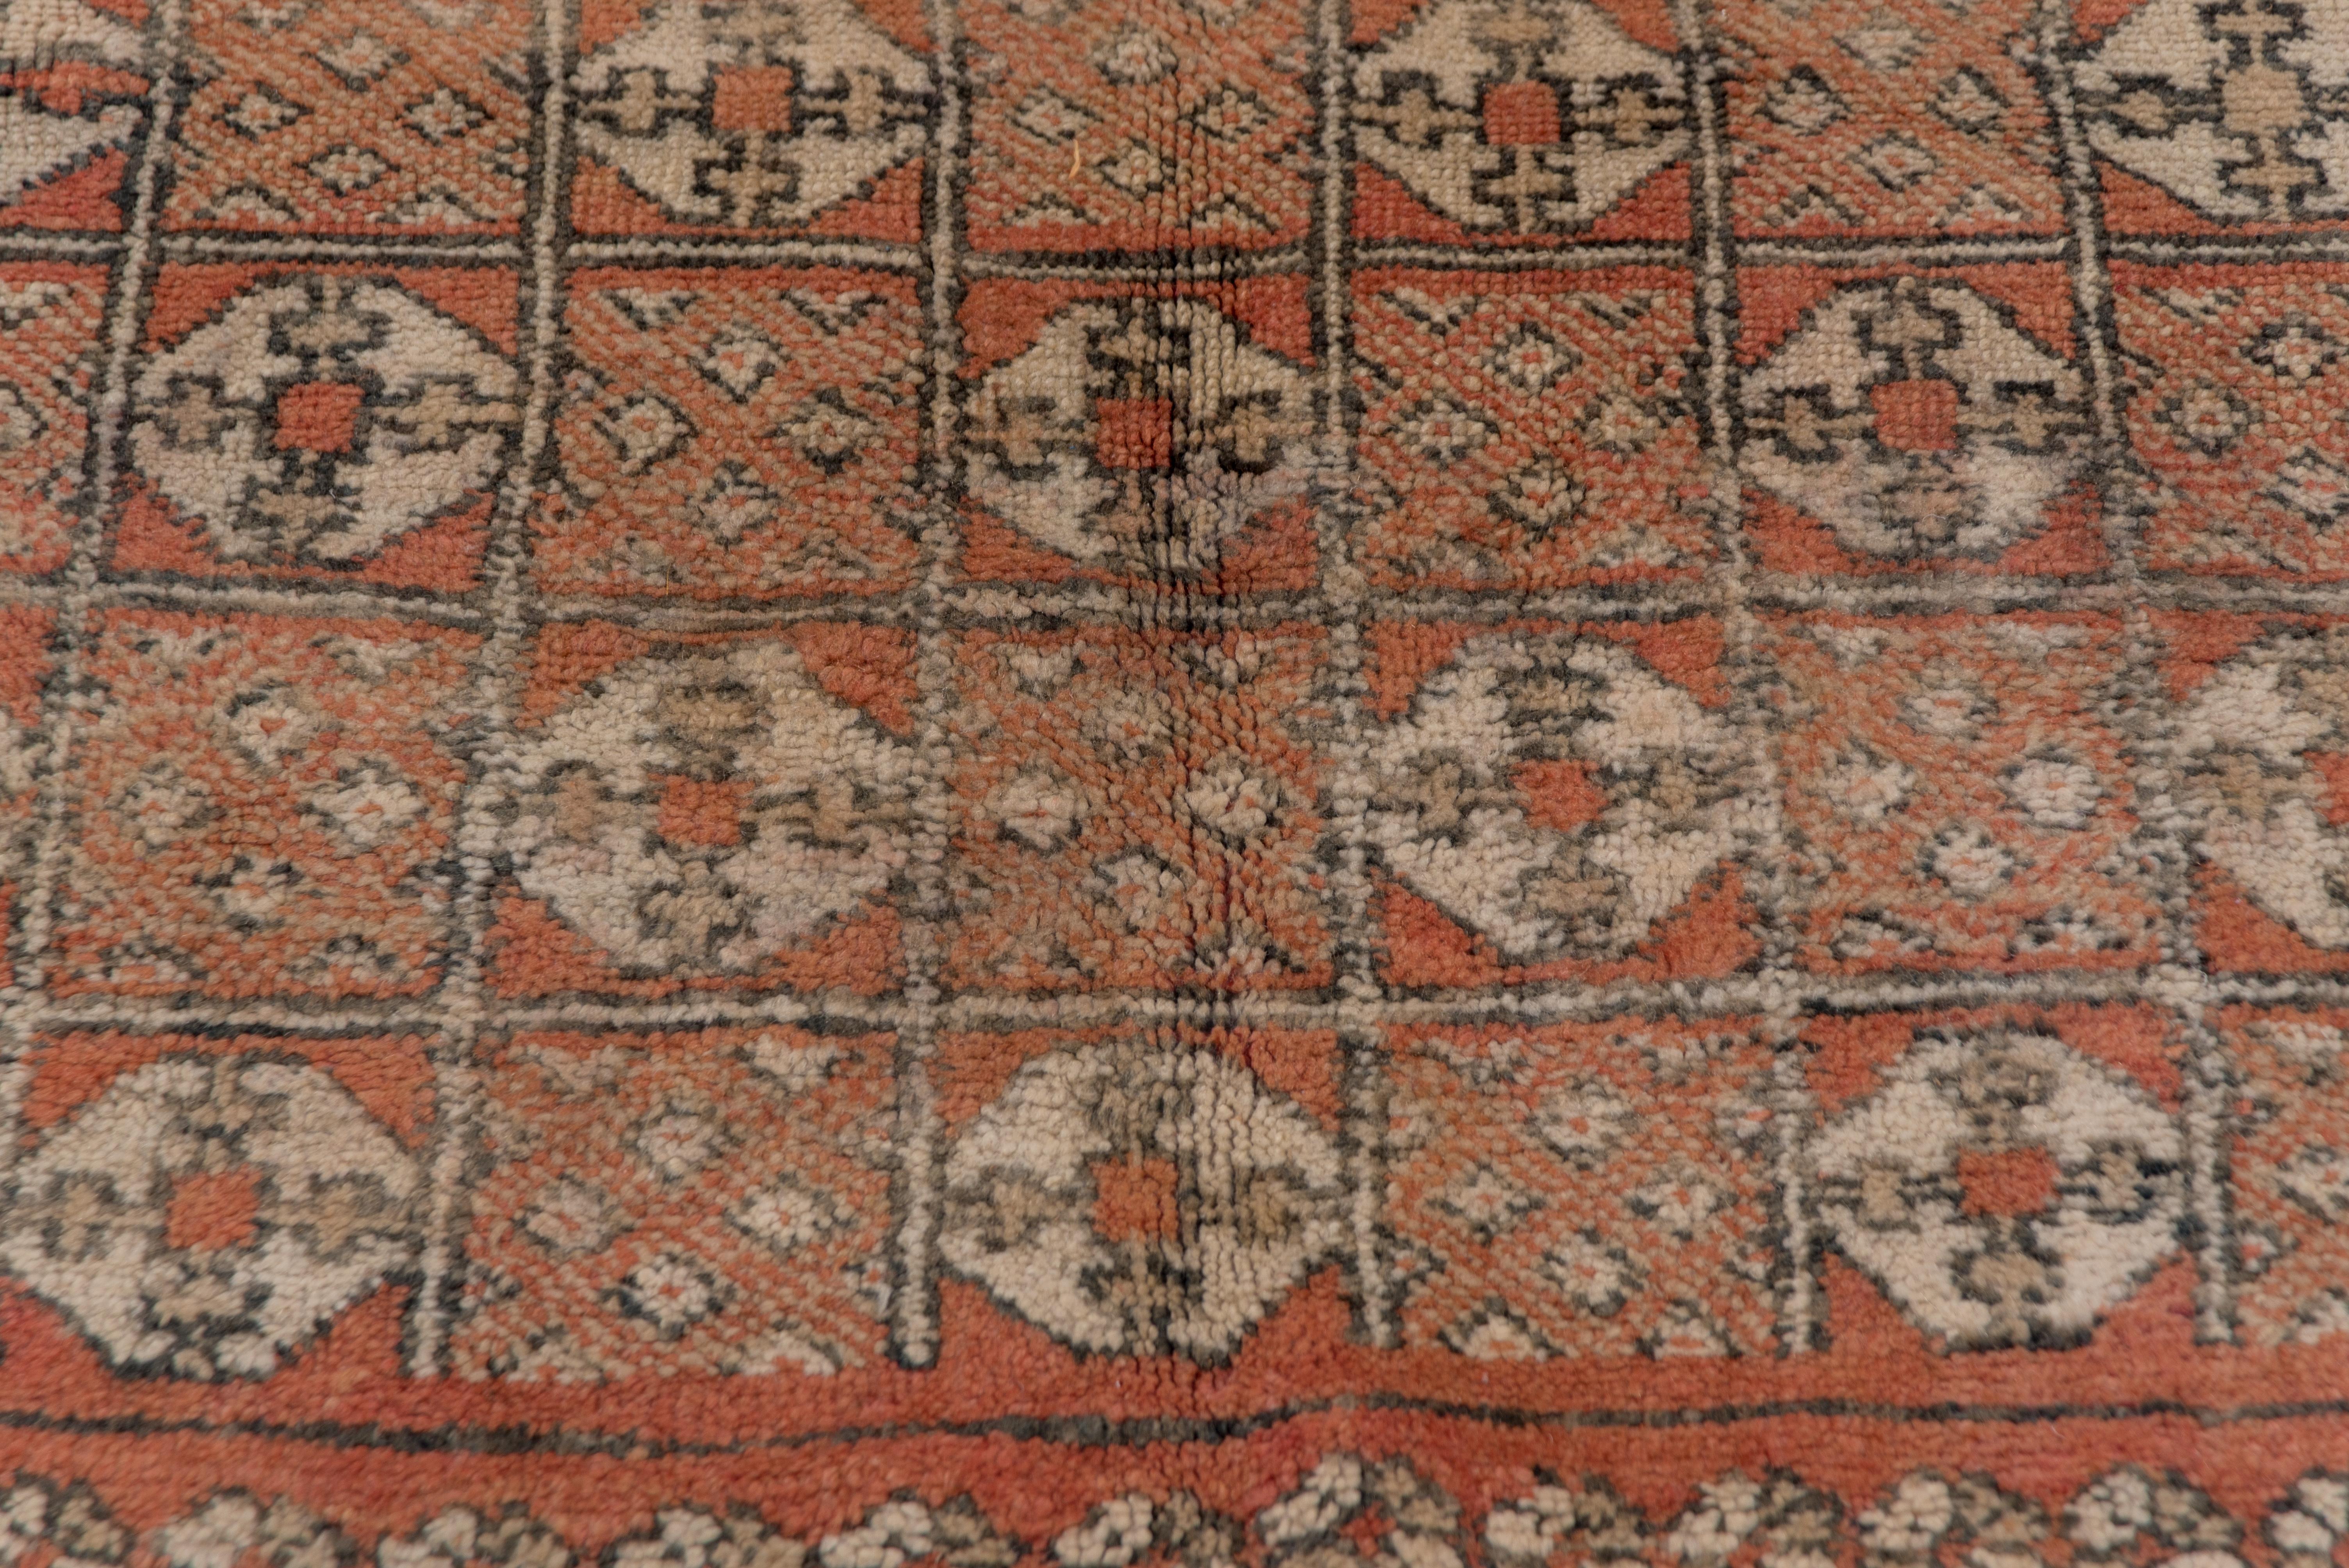 Vintage Red Moroccan Carpet 2